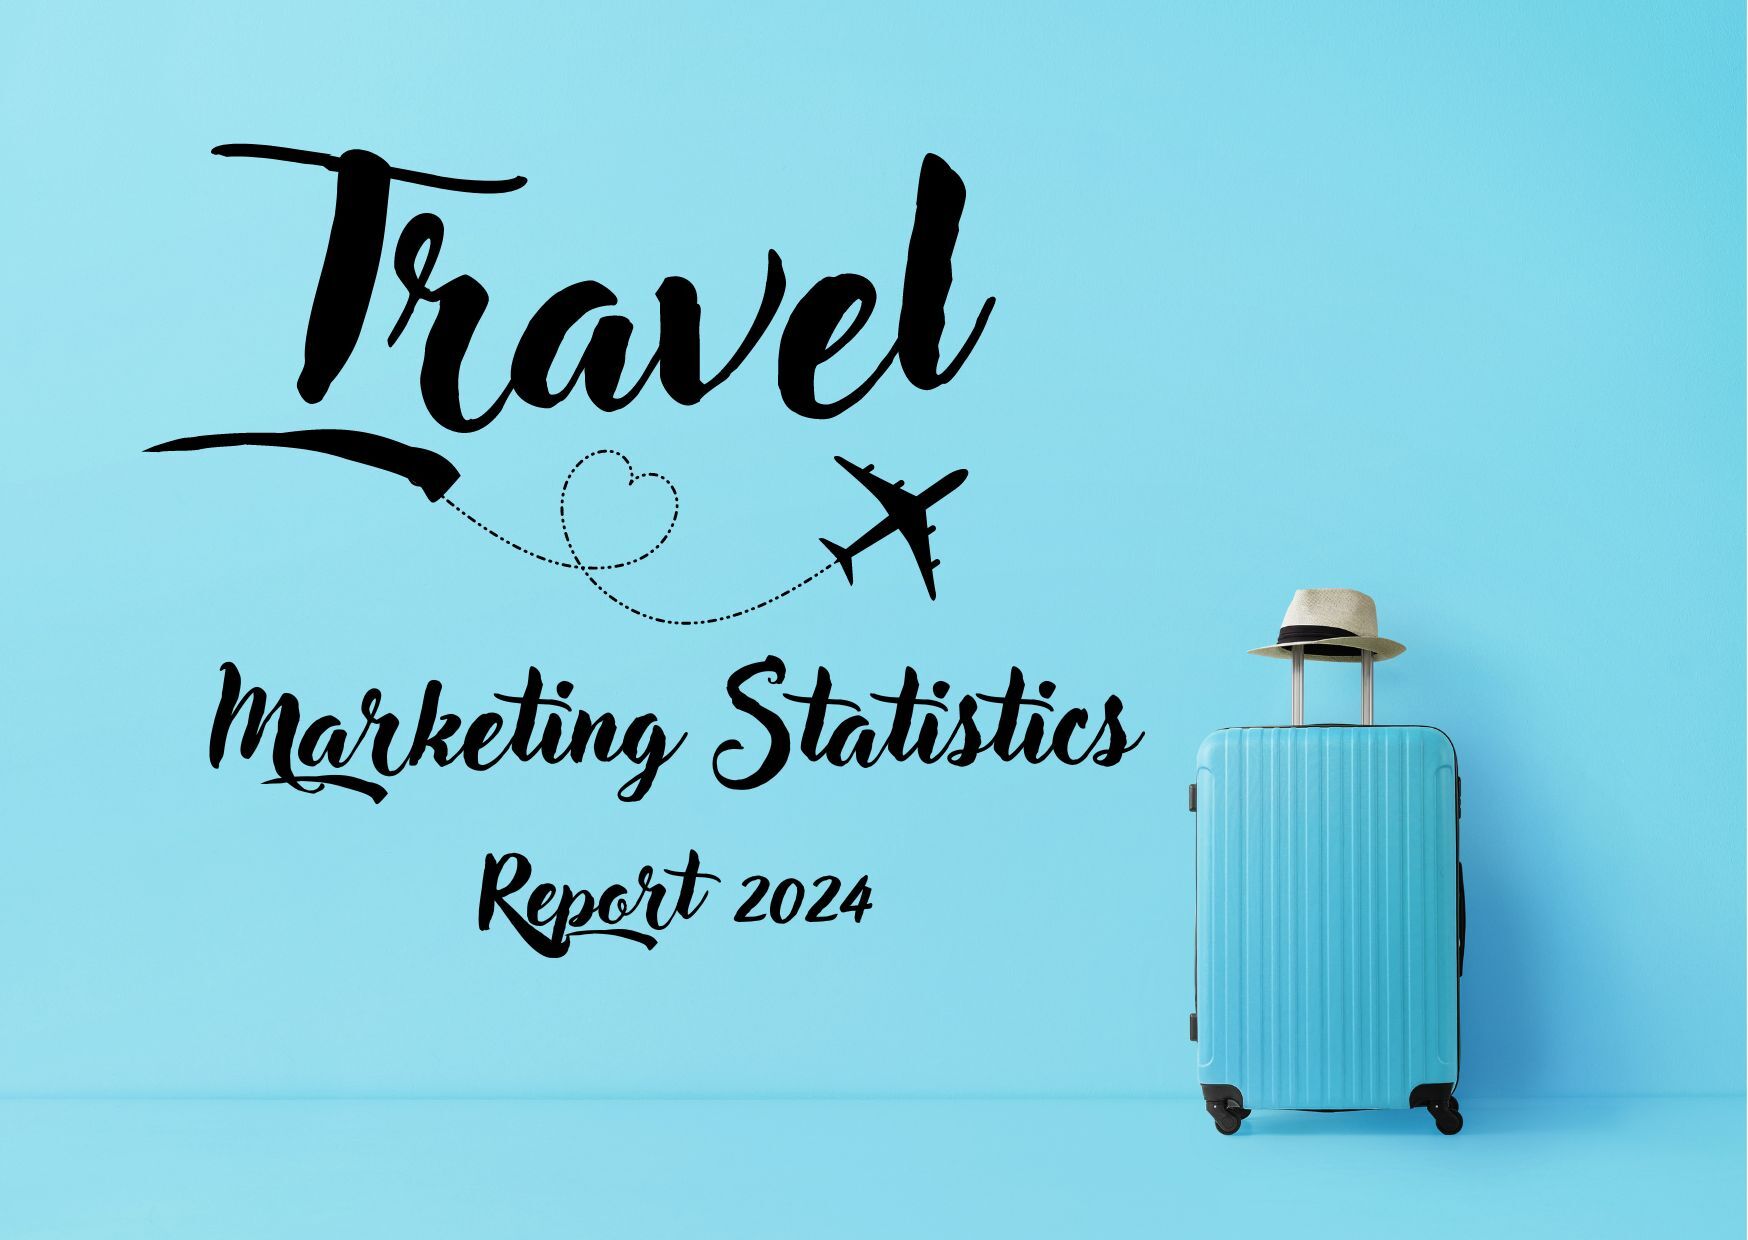 Travel marketing statistics report